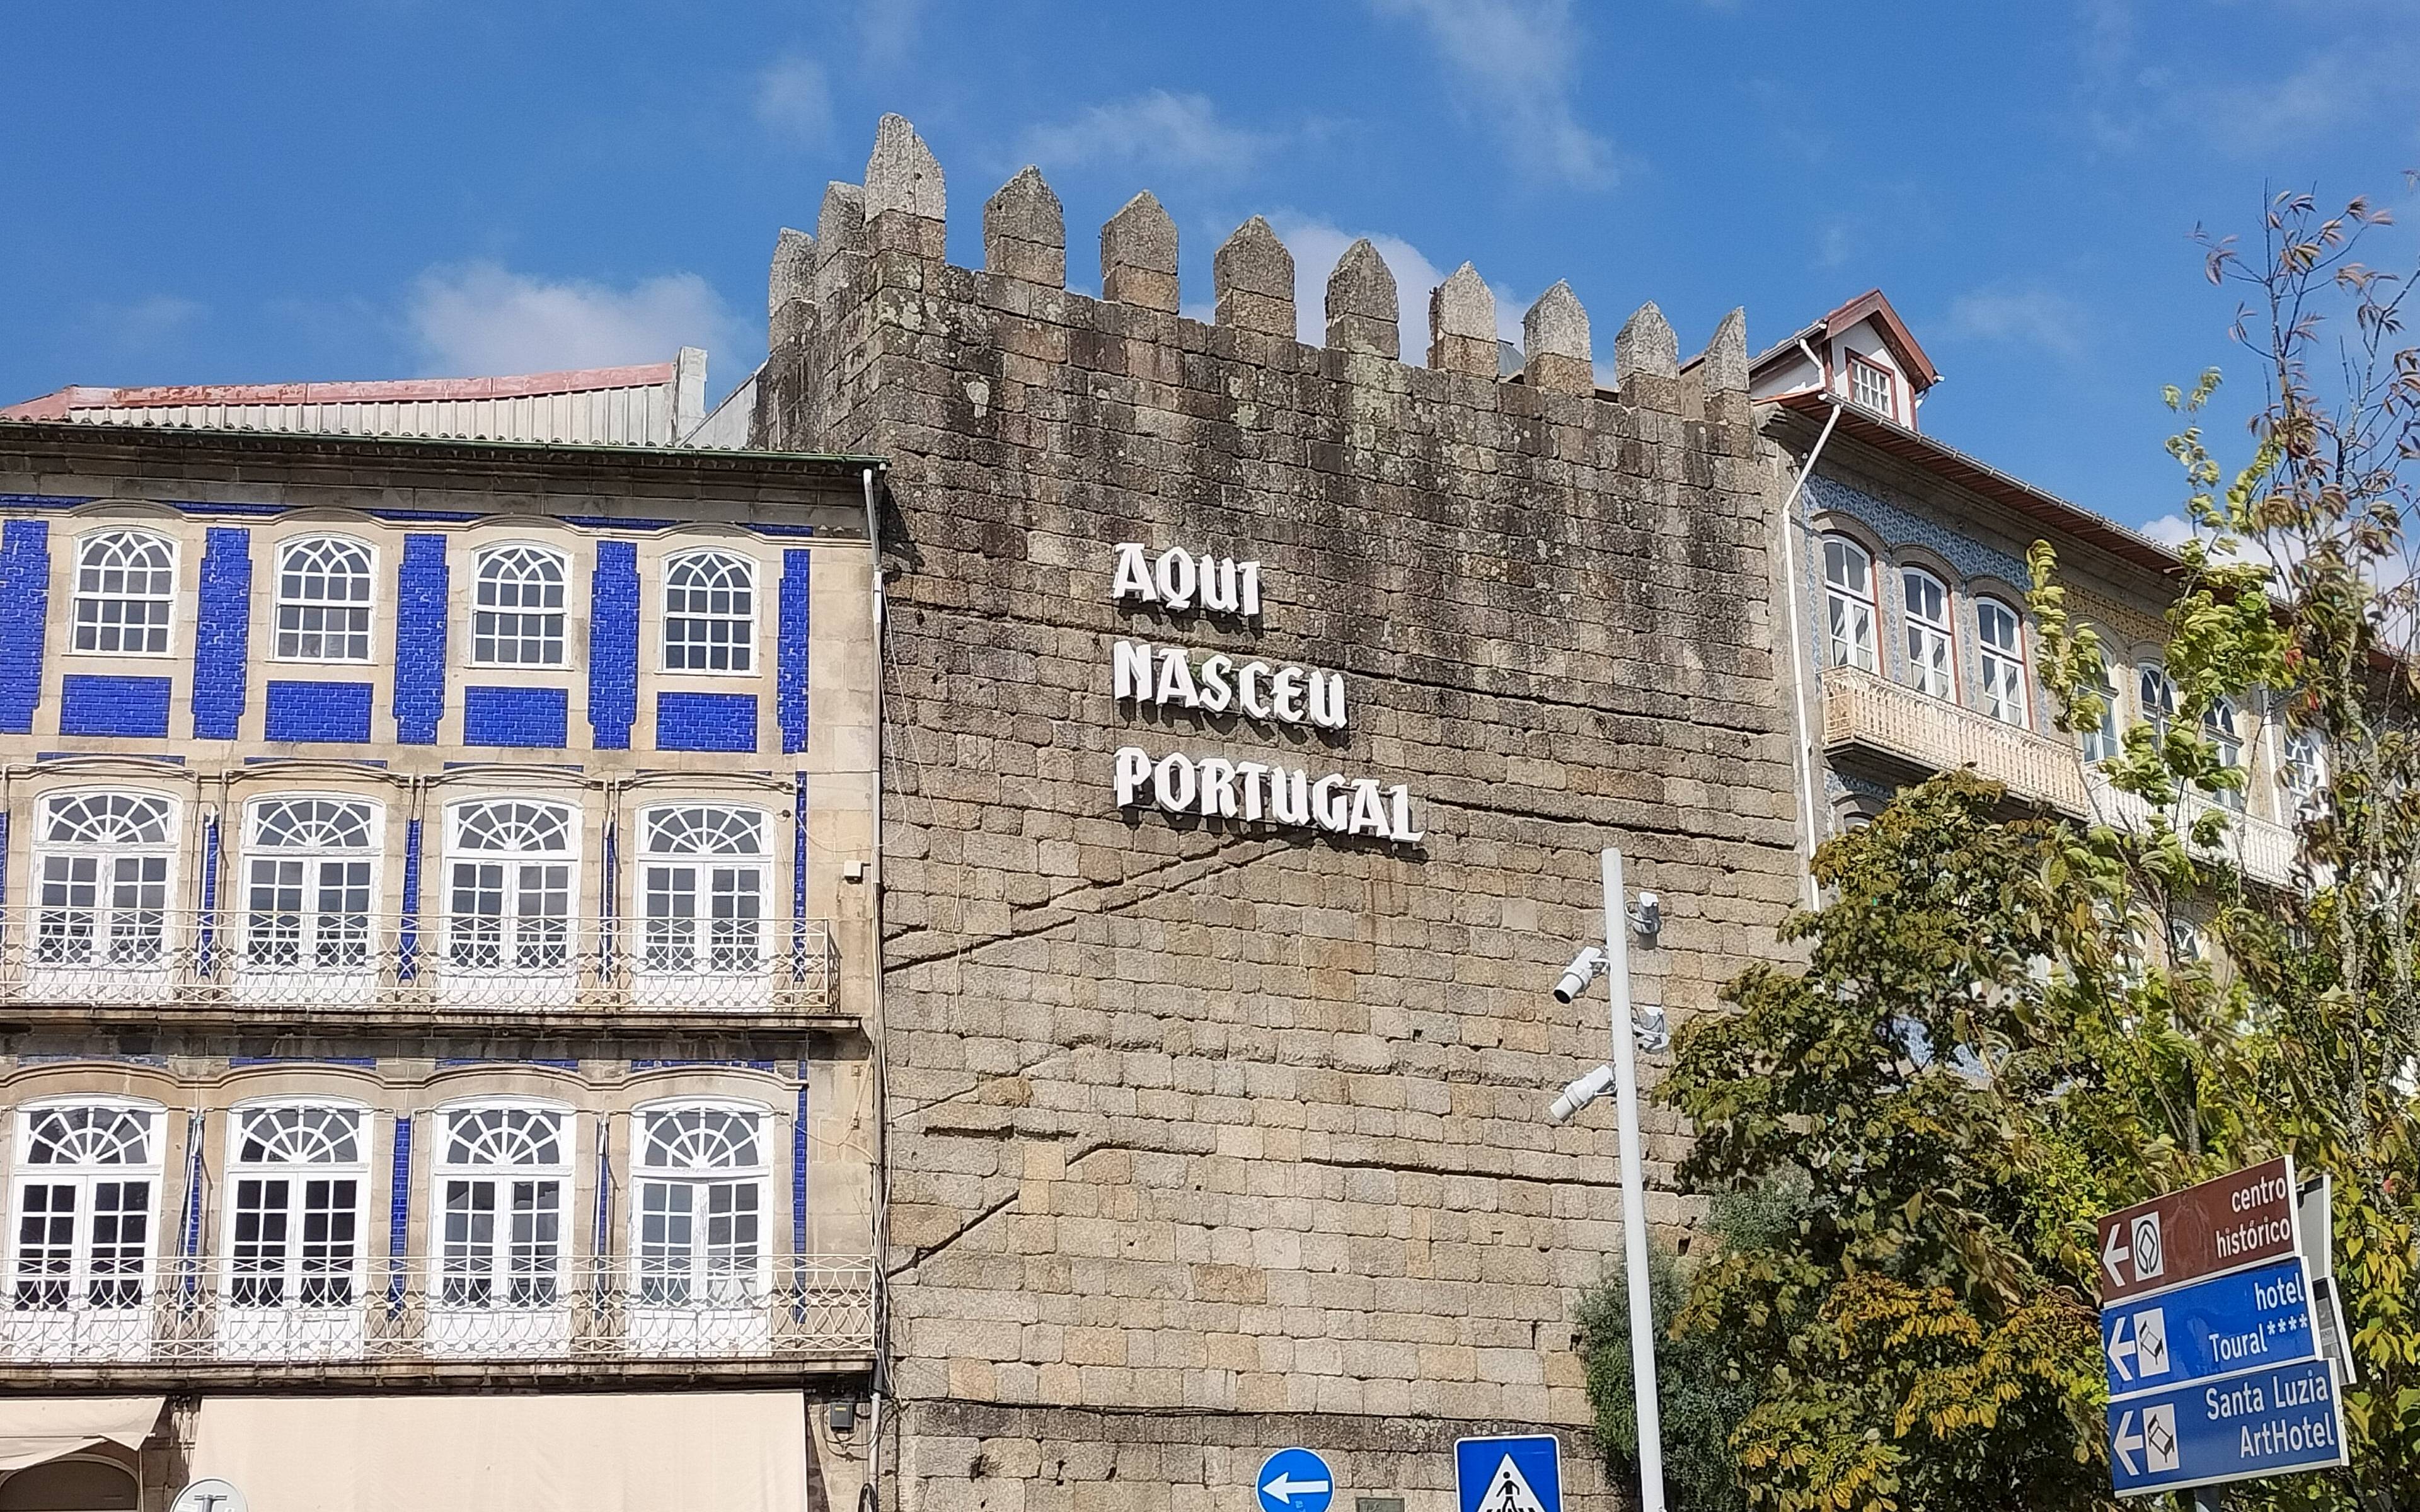 Guimarães, berceau du Portugal